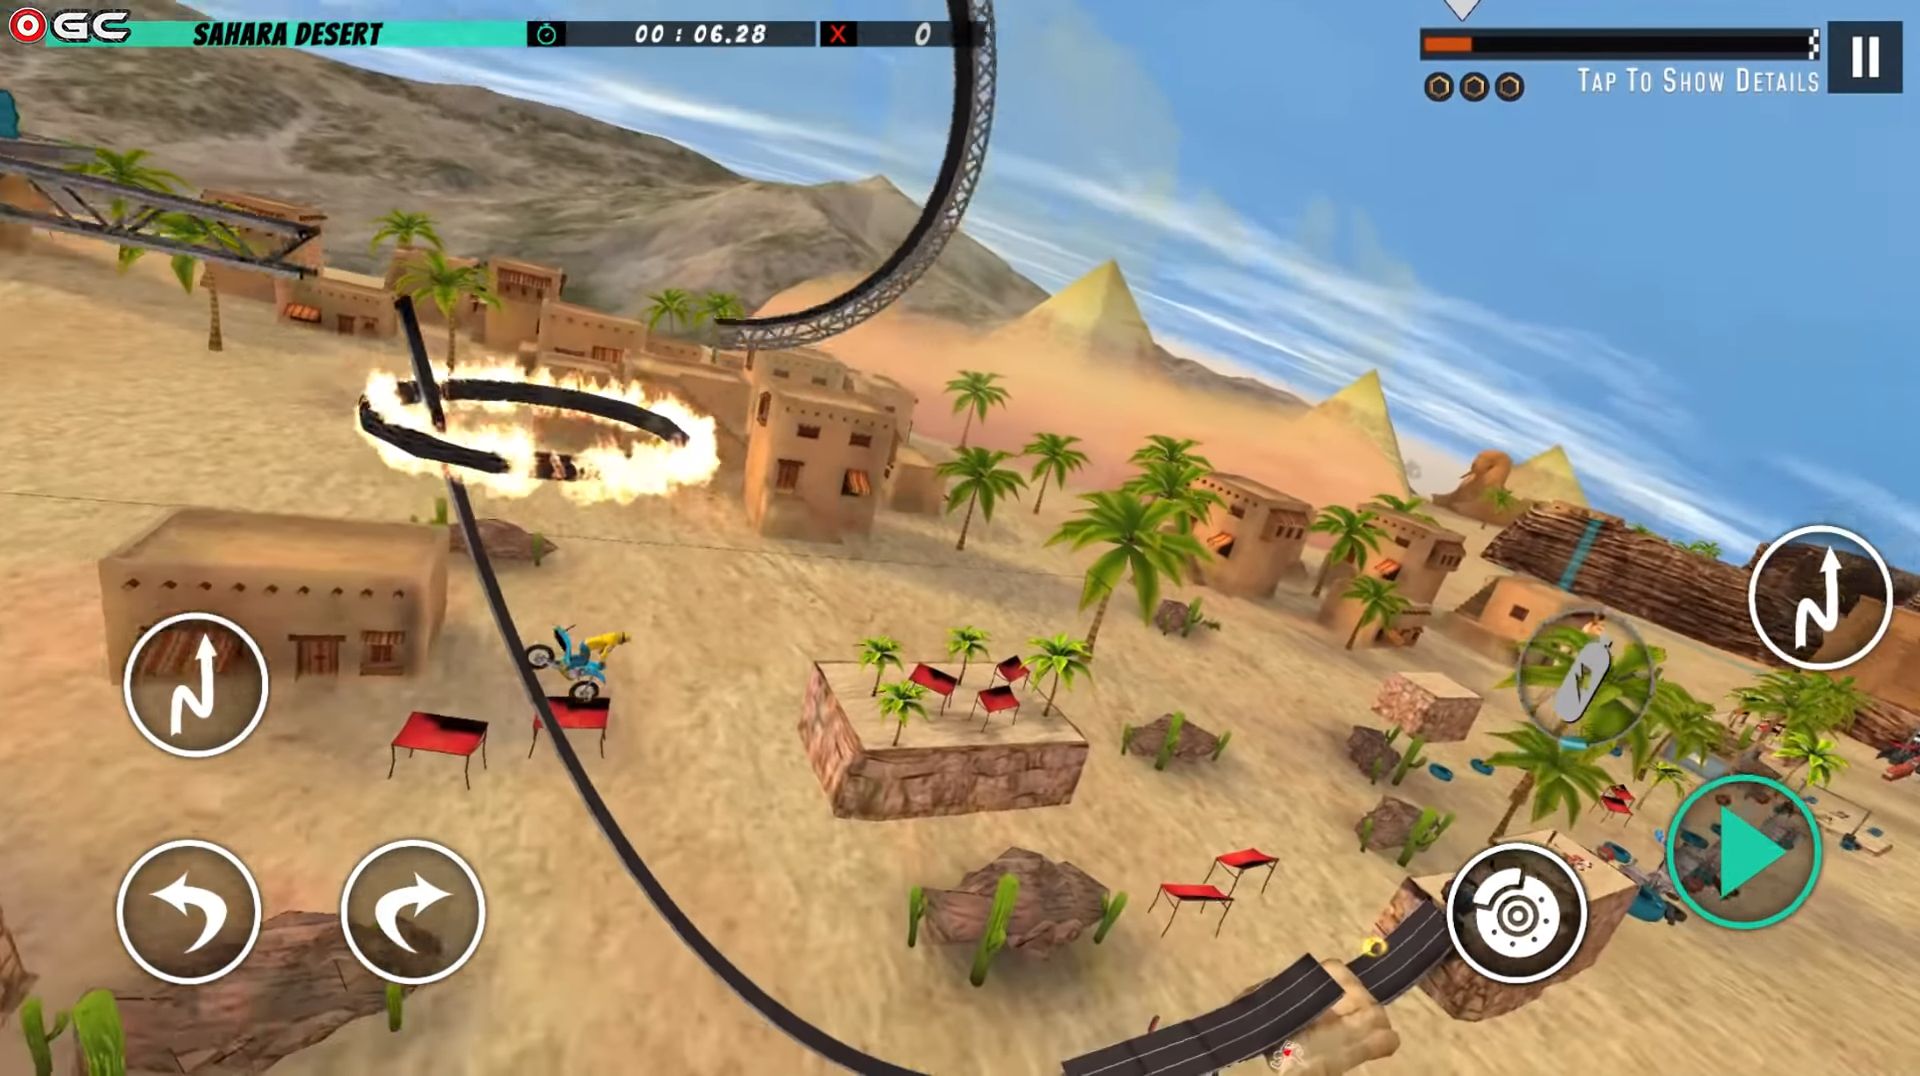 Bike Stunt 2 New Motorcycle Game - New Games 2020 screenshot 1